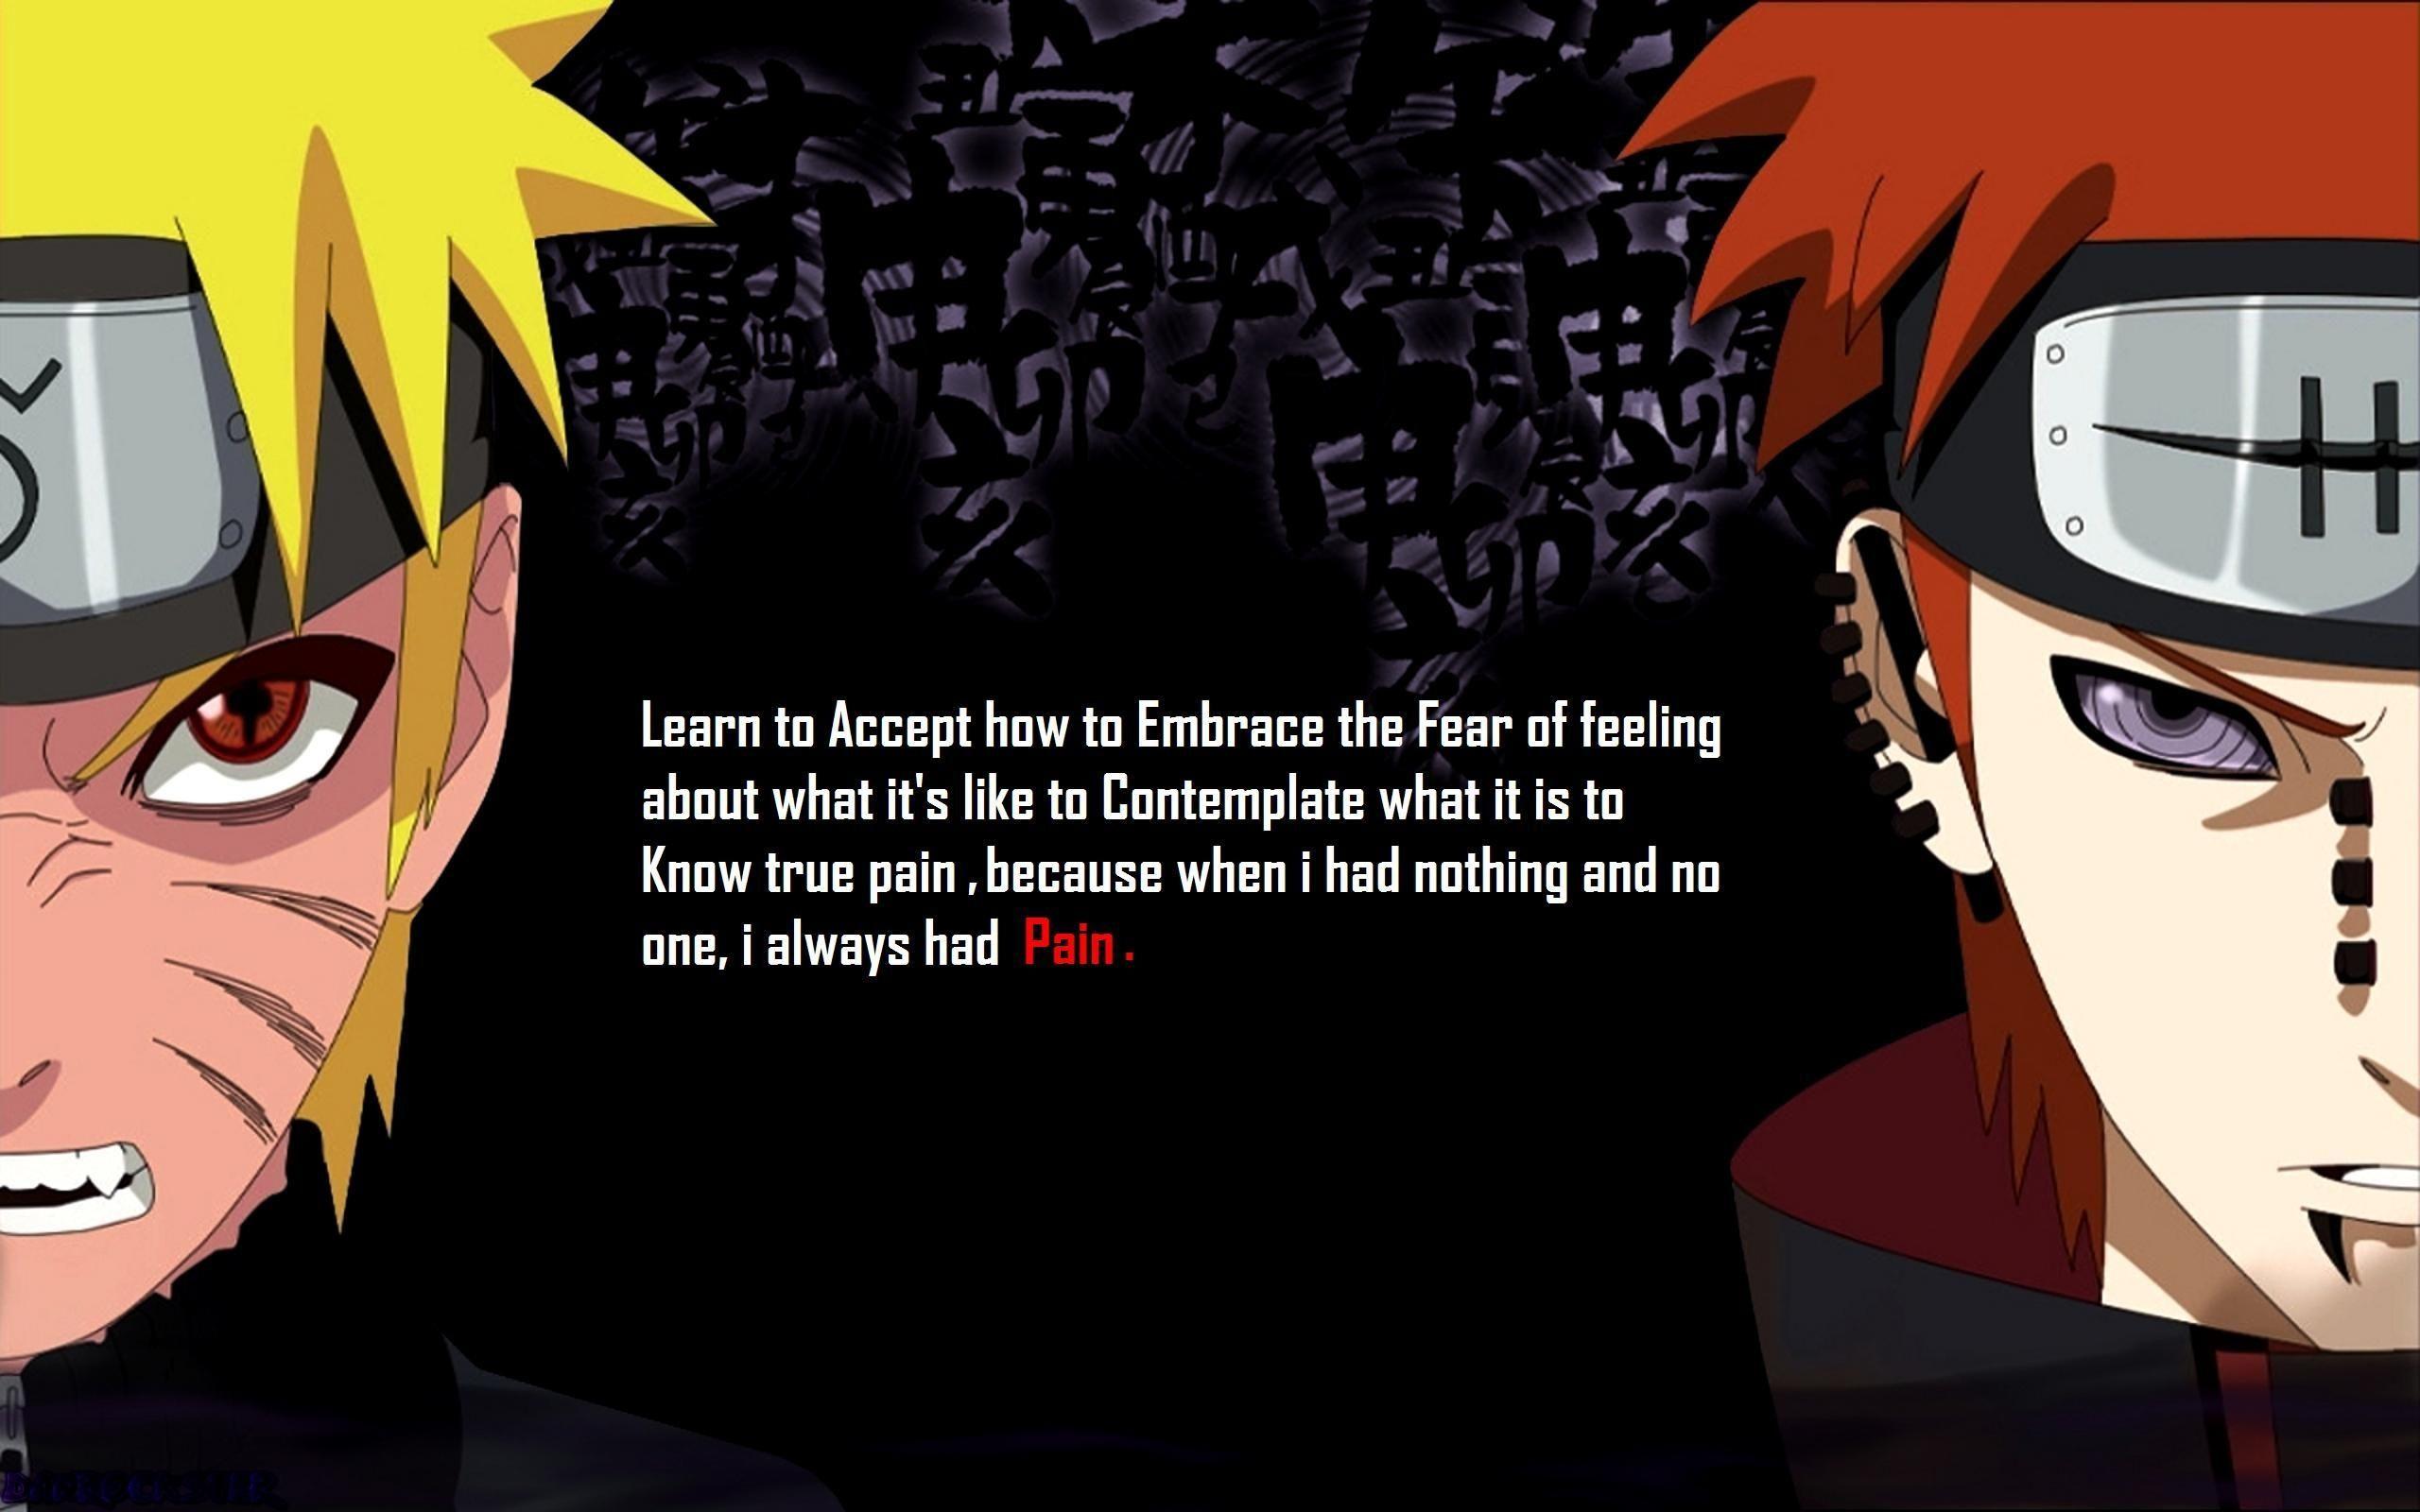 Naruto Quotes Wallpapers - Wallpaper Cave